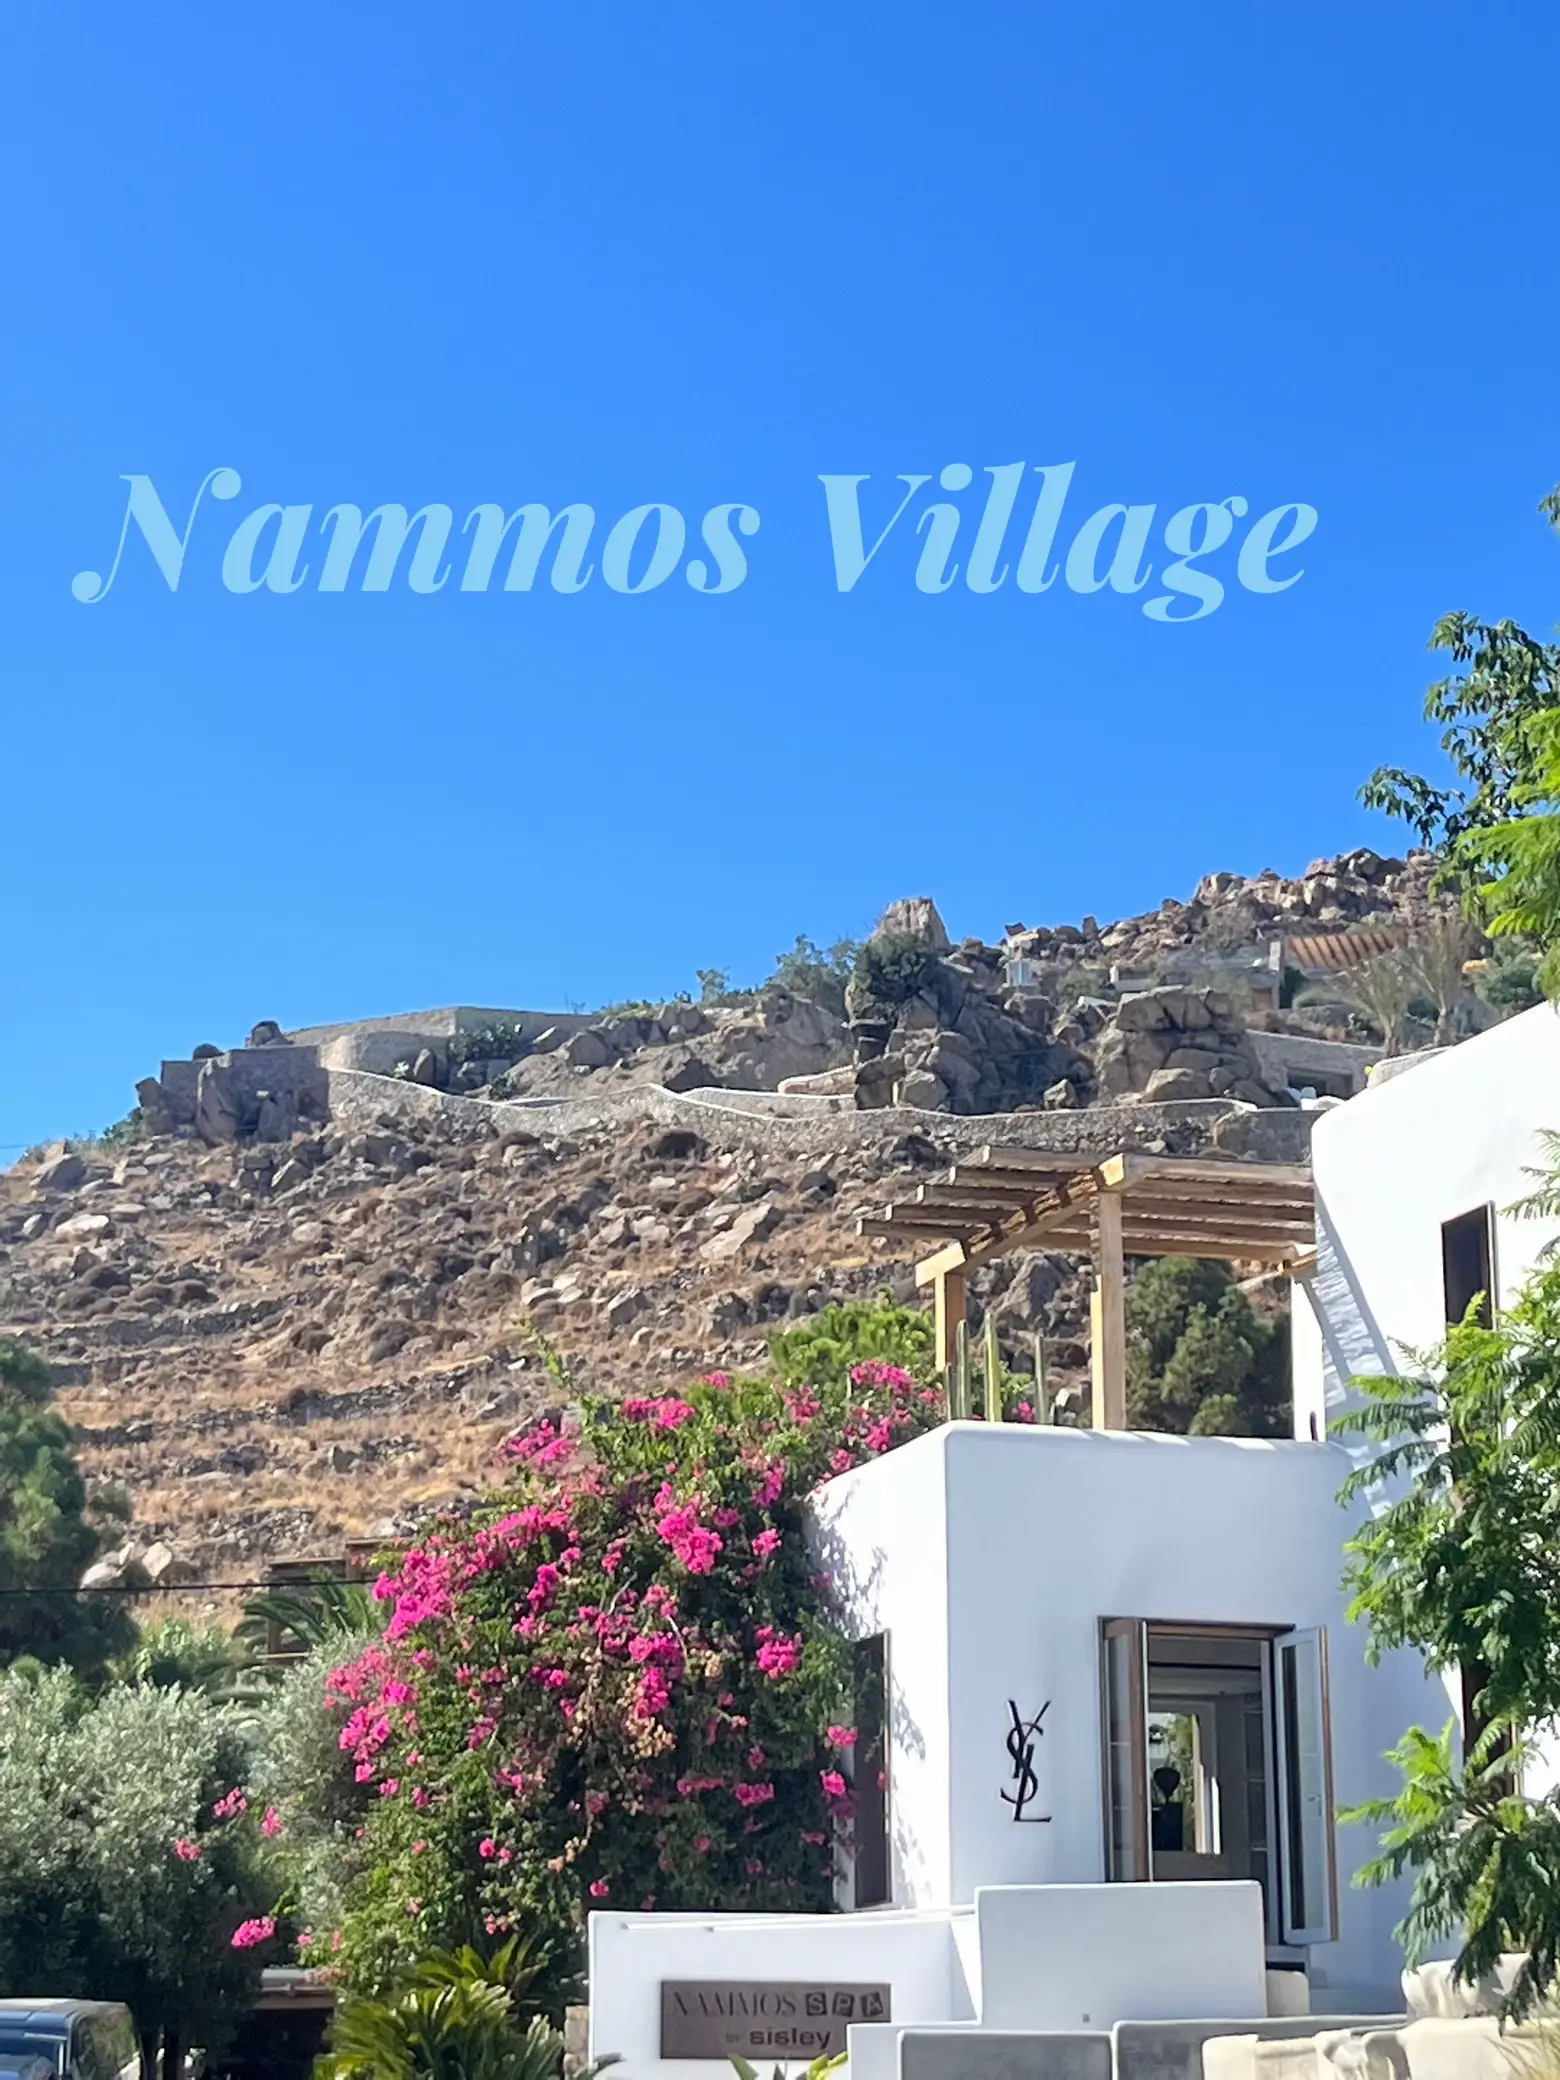 Nammos in Mykonos, Gallery posted by Sophia